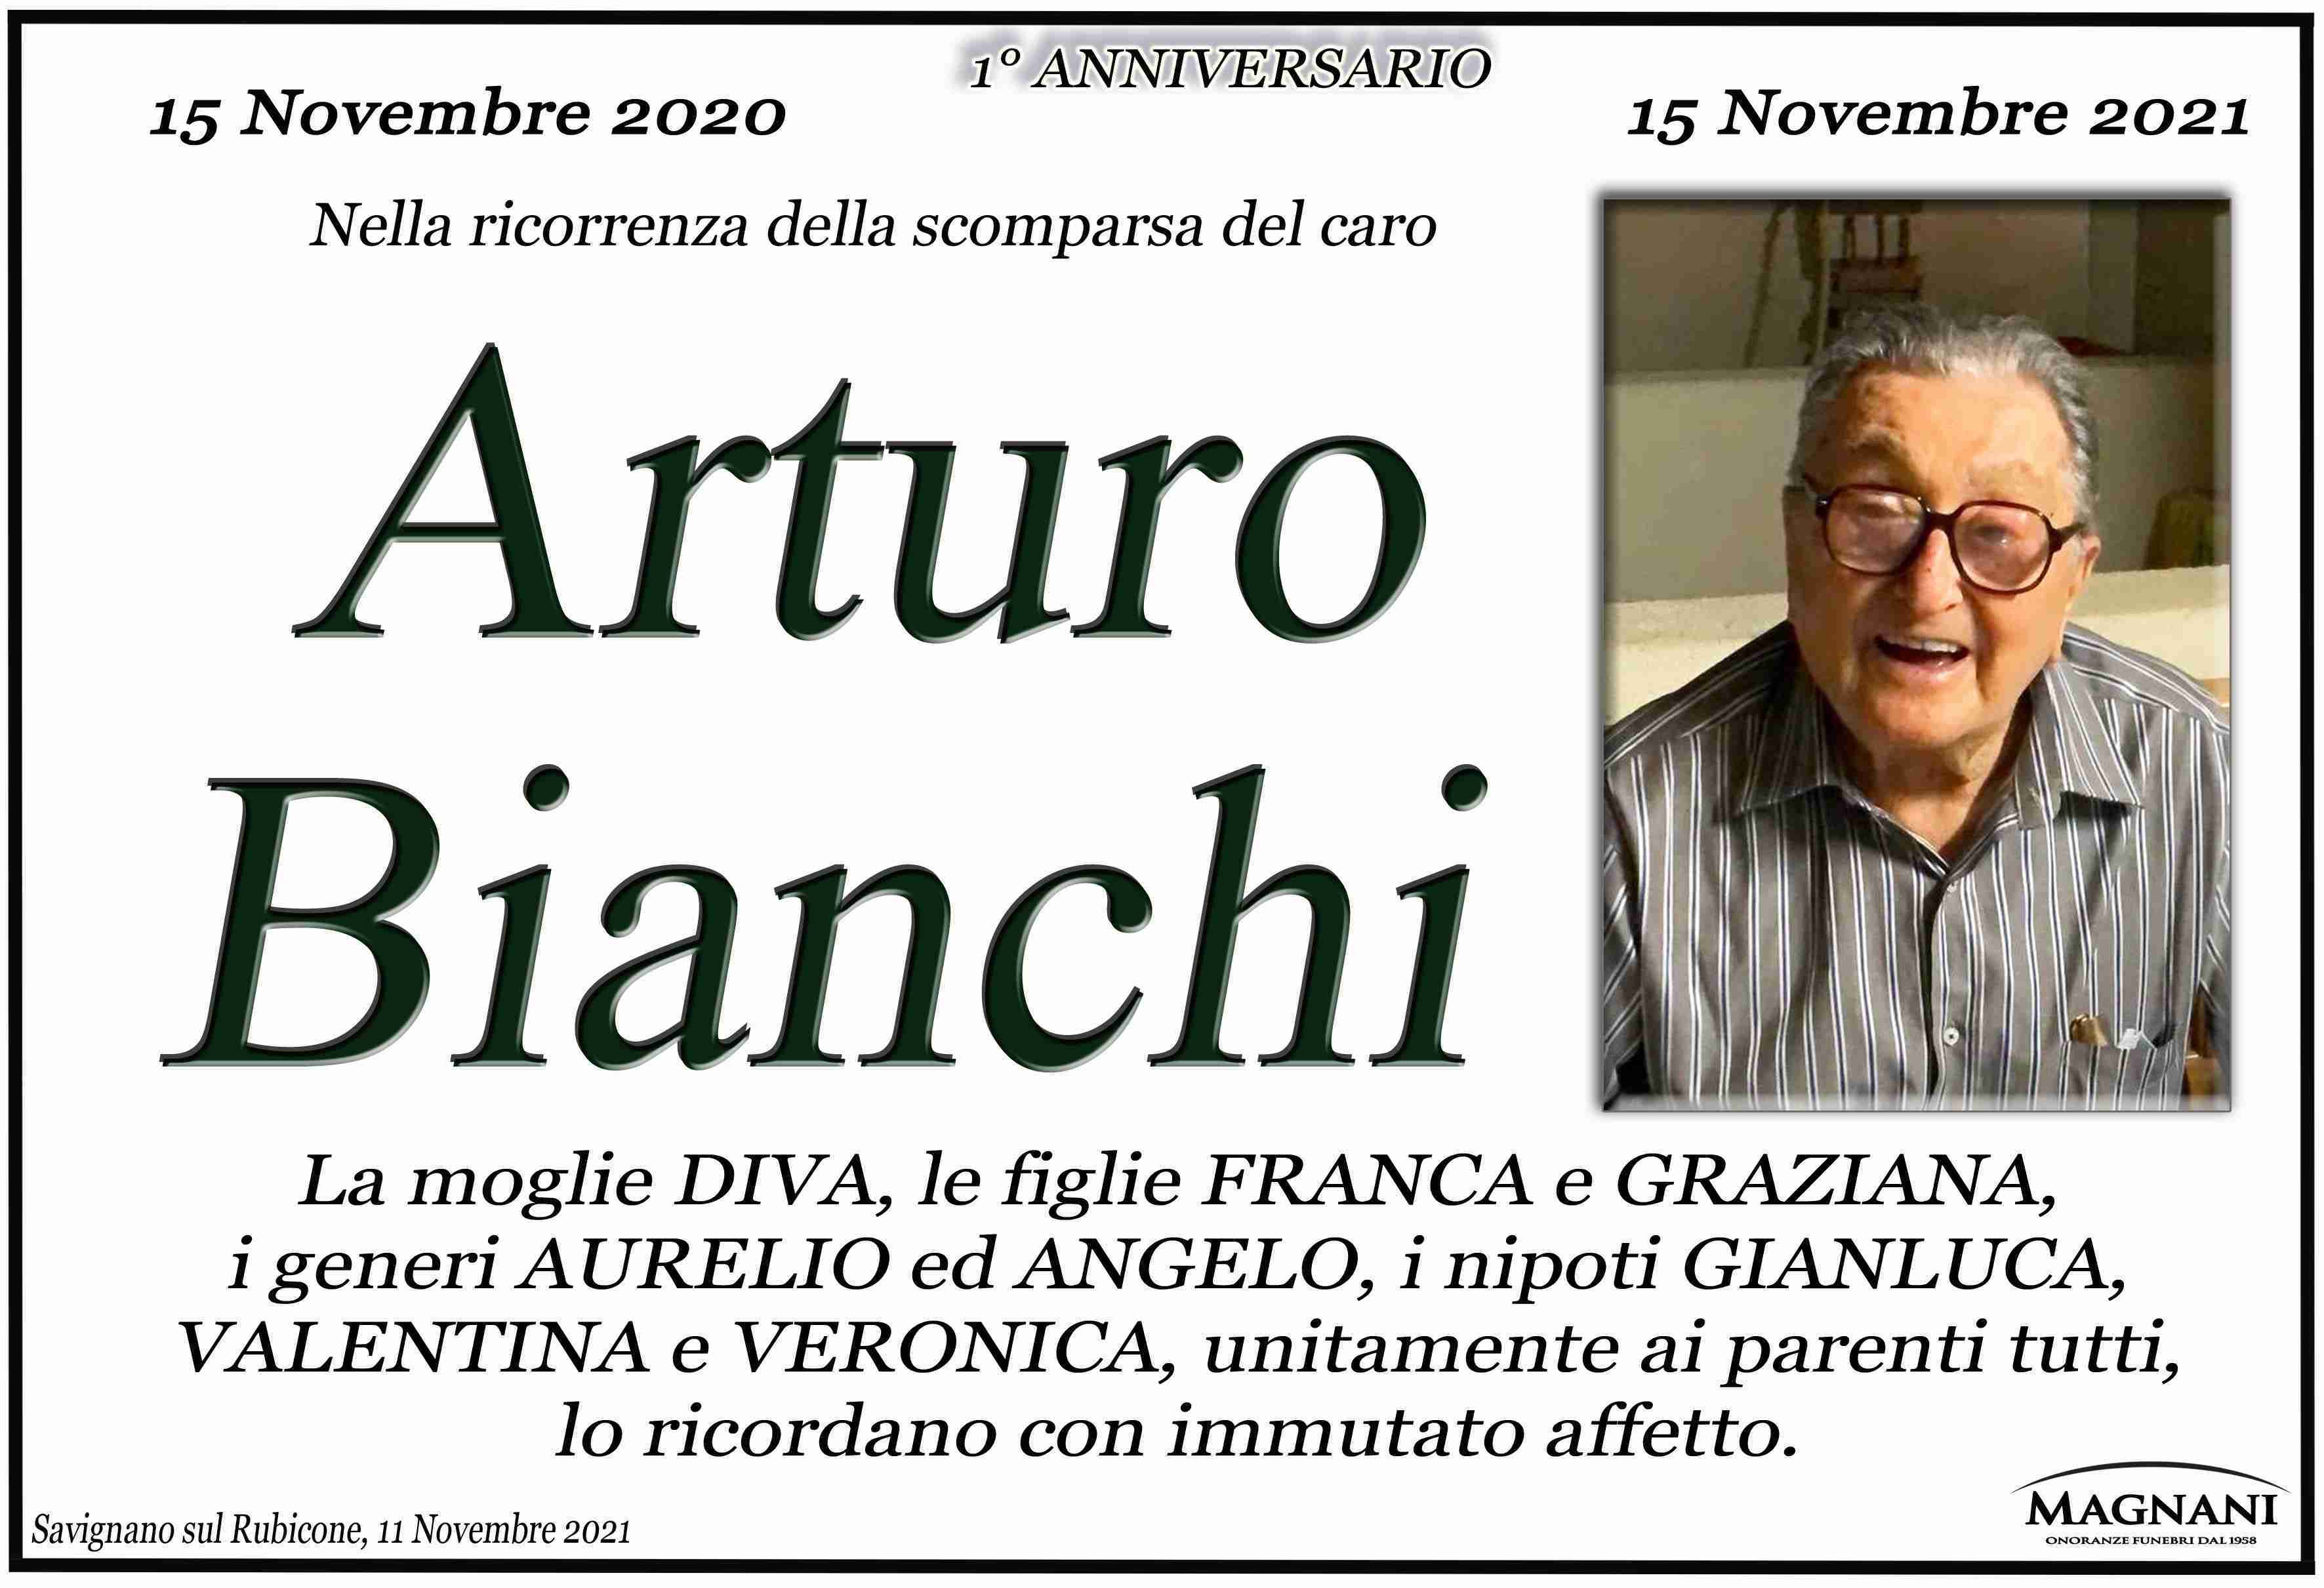 Arturo Bianchi